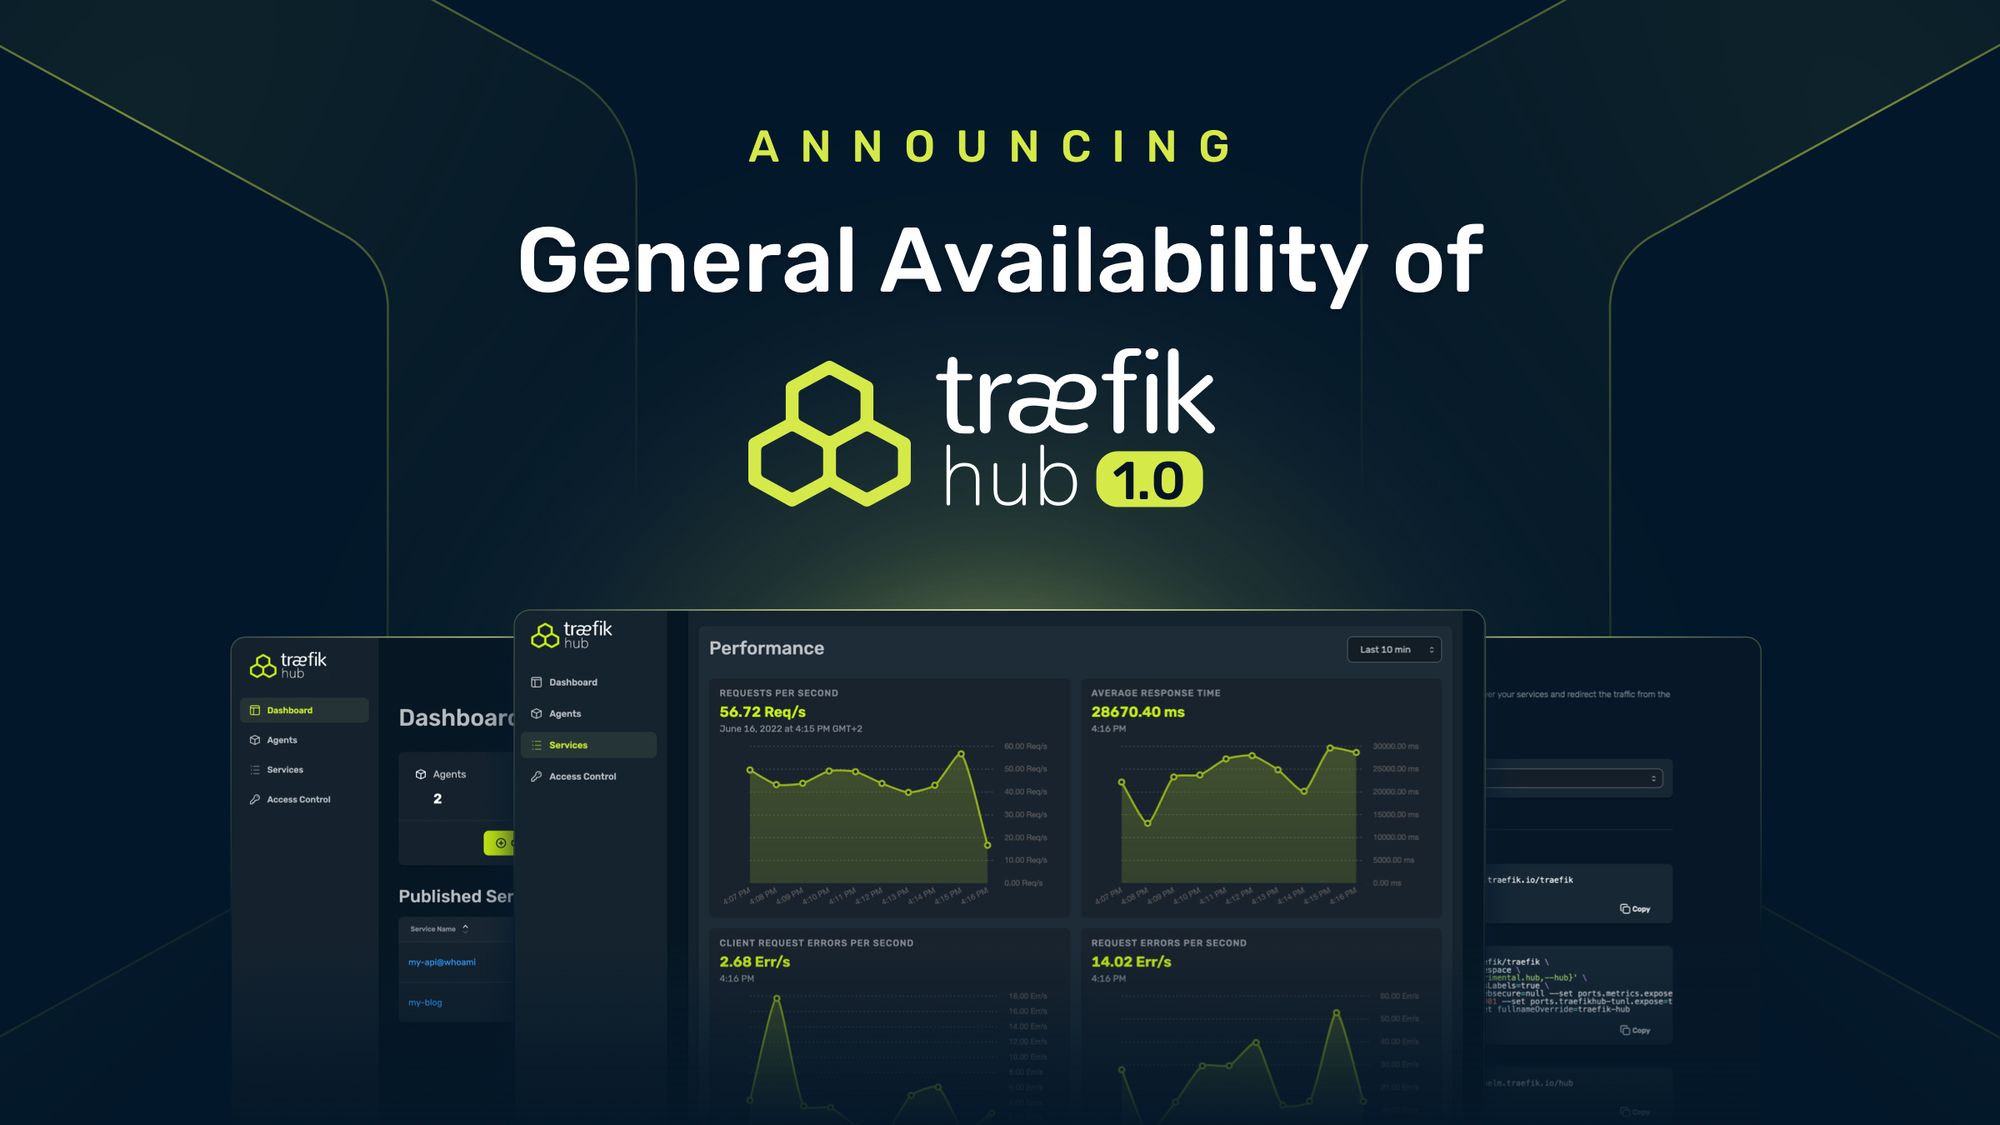 traefik hub 1.0 is in general availability